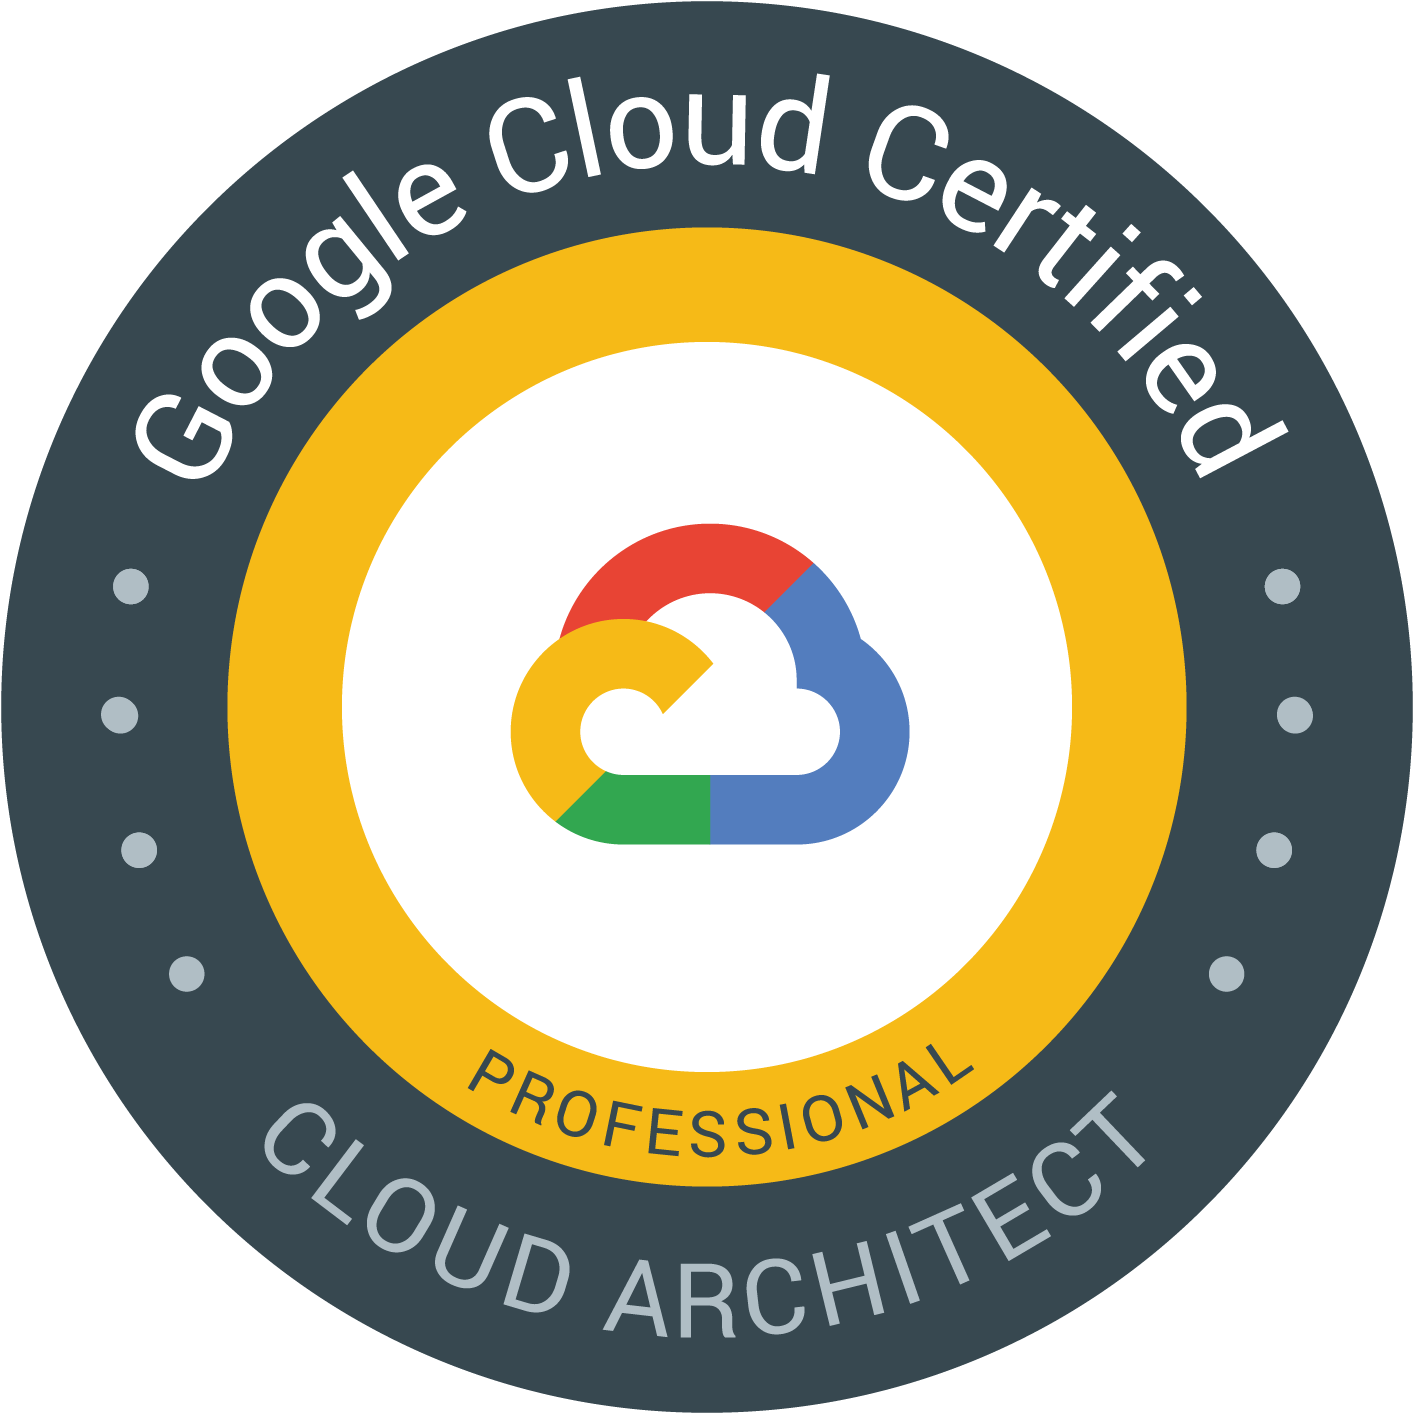 Google Cloud Certified Professional Cloud Architect Badge PNG